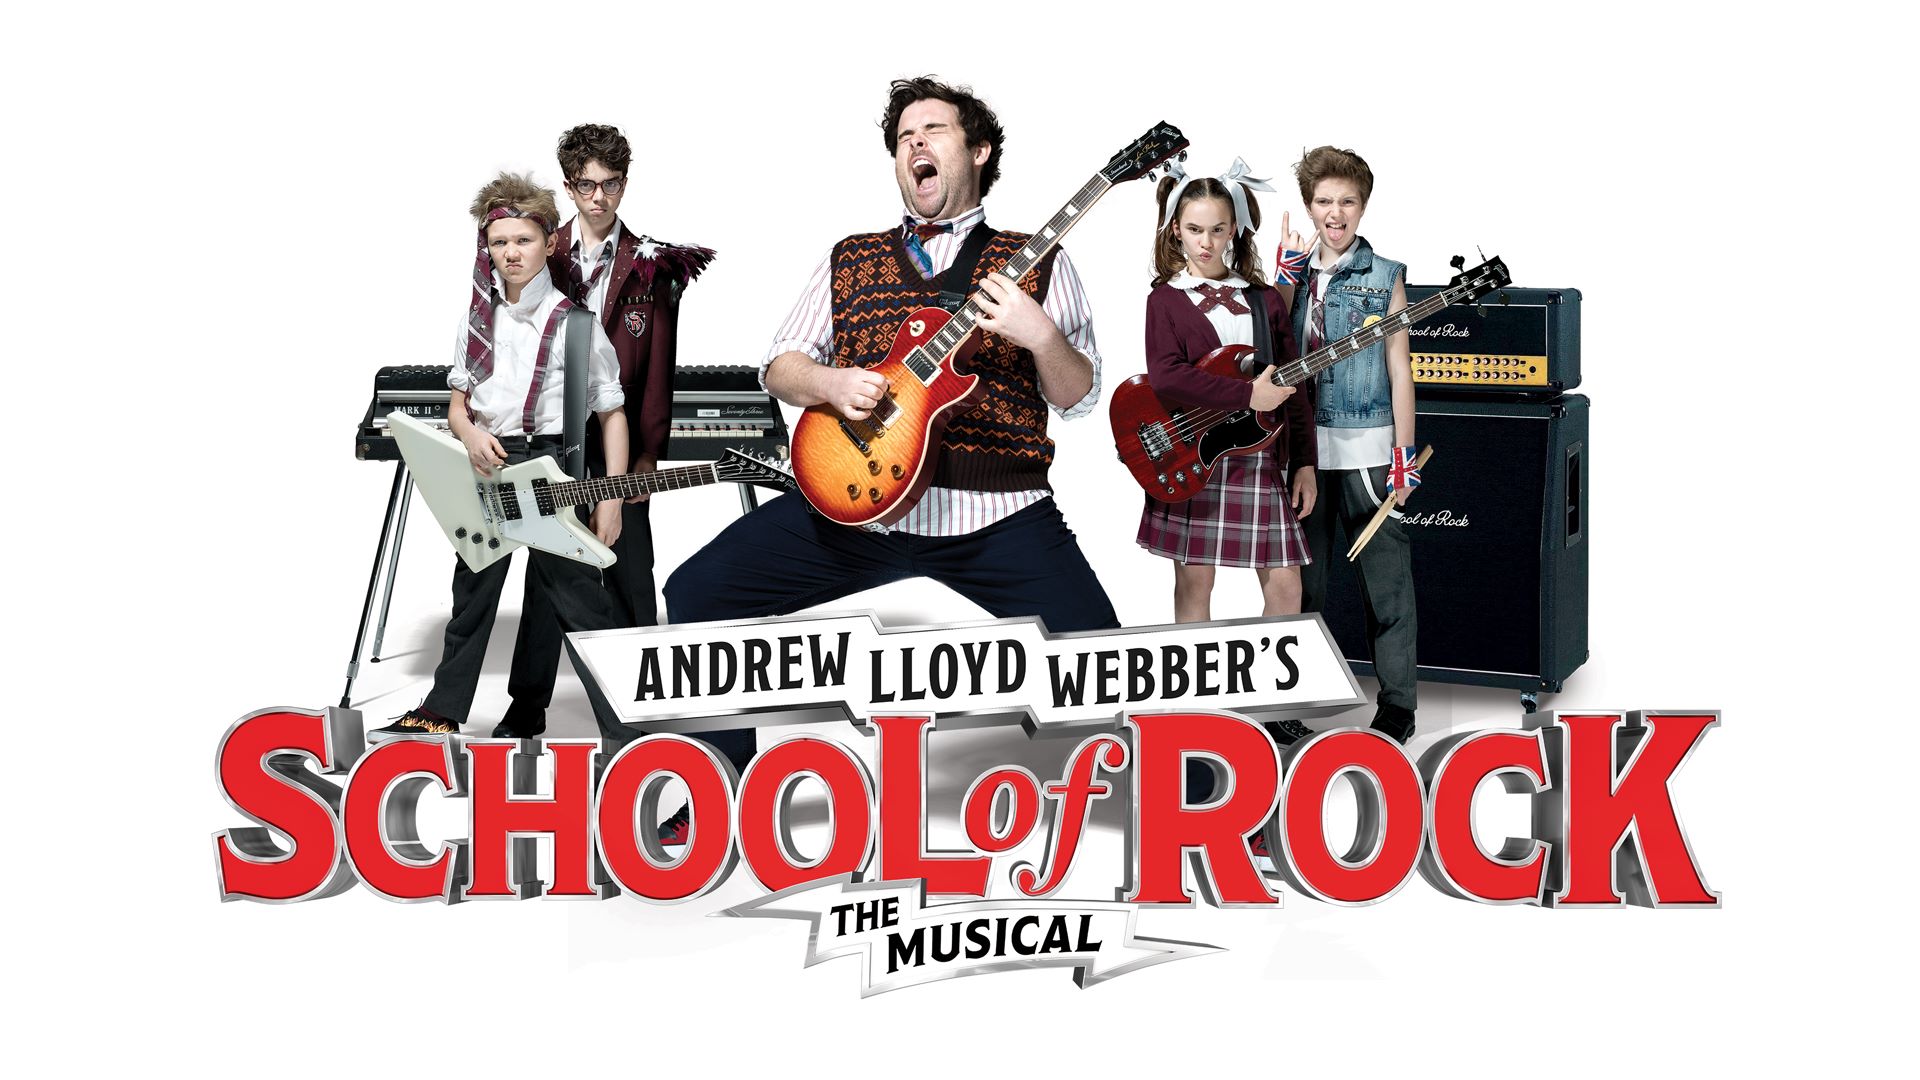 'School of Rock' the Musical Hits Shanghai!